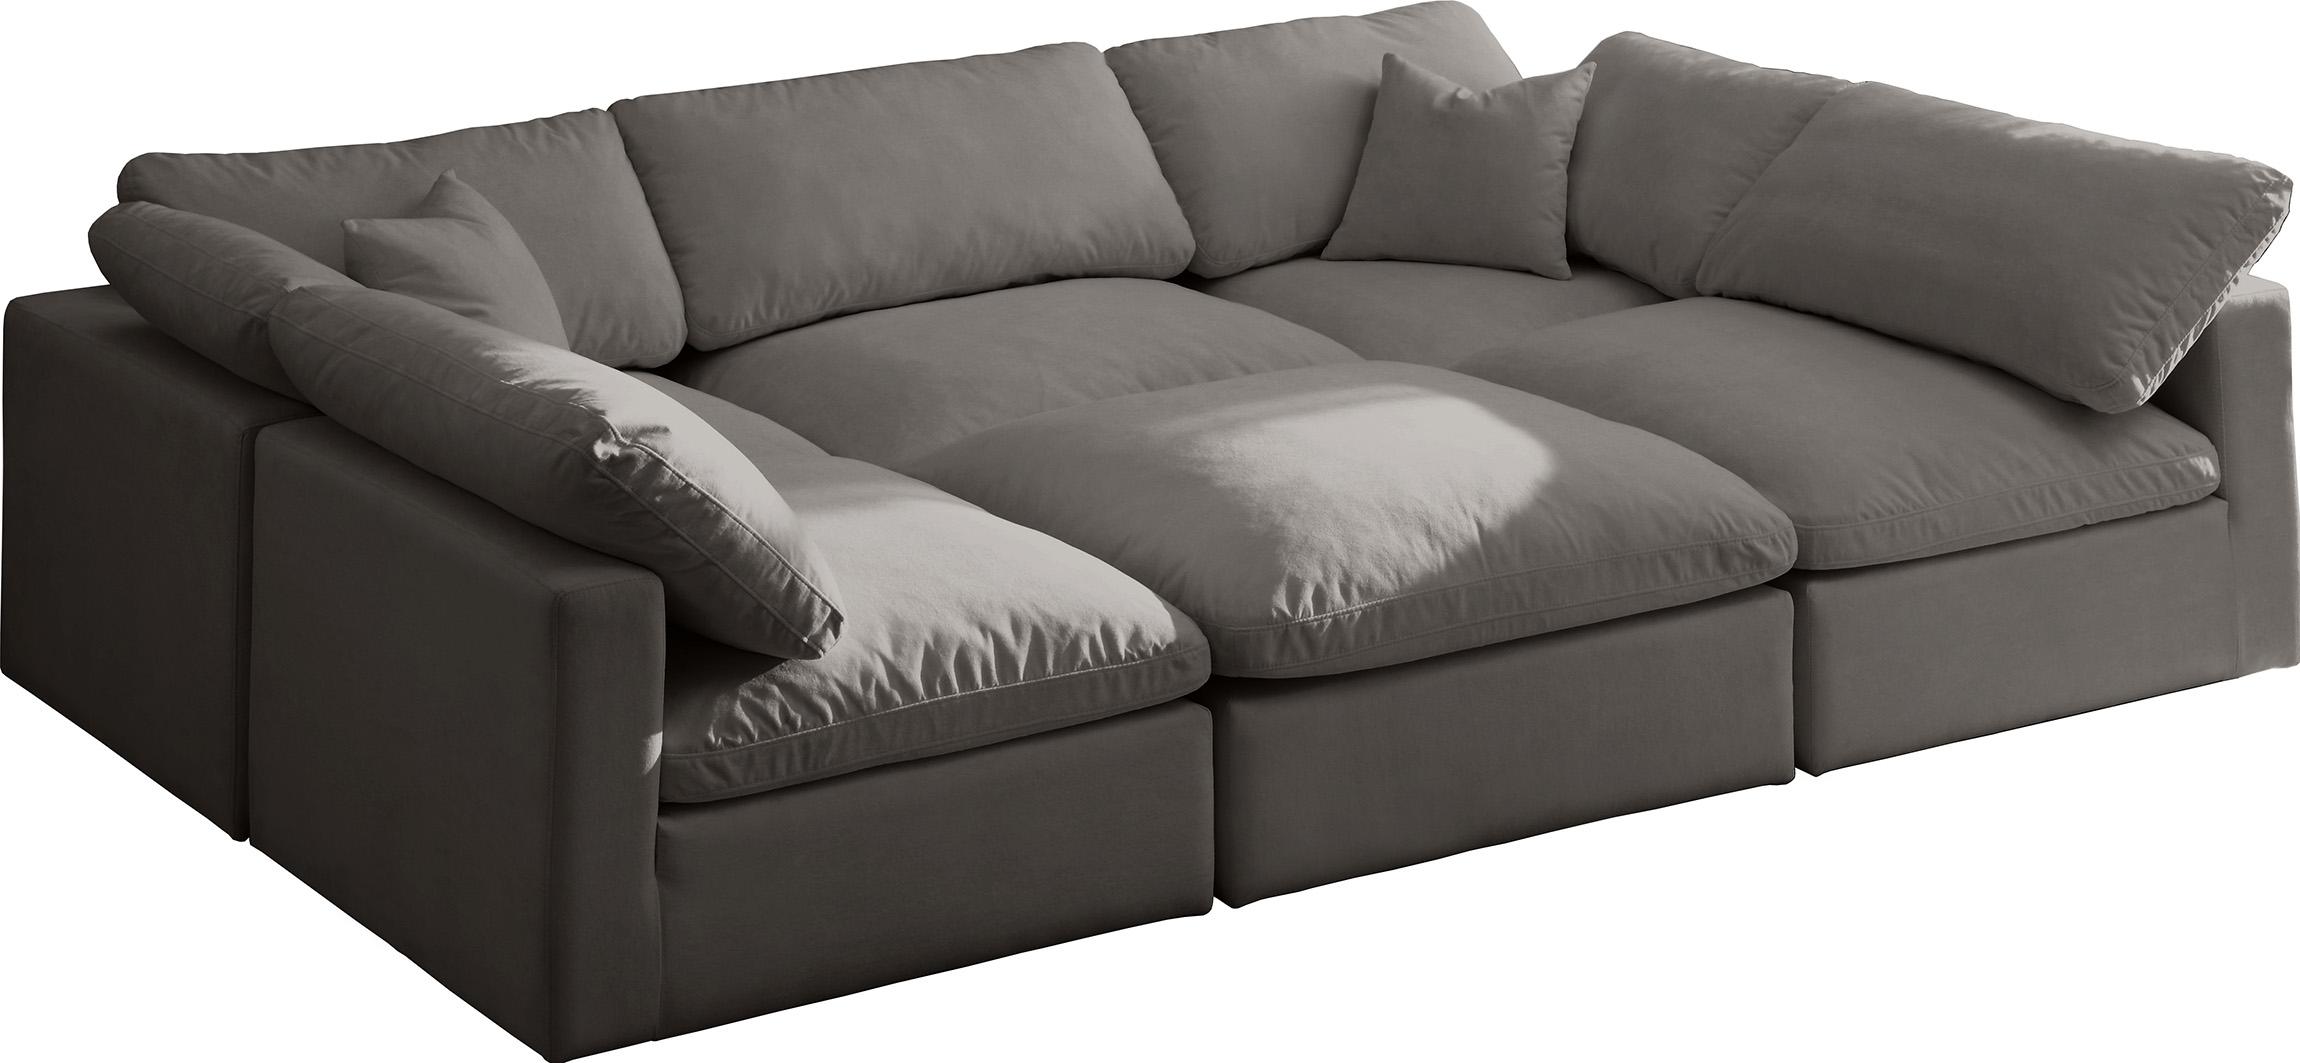 Contemporary, Modern Modular Sectional Sofa 602Grey-Sec6C 602Grey-Sec6C in Gray Fabric